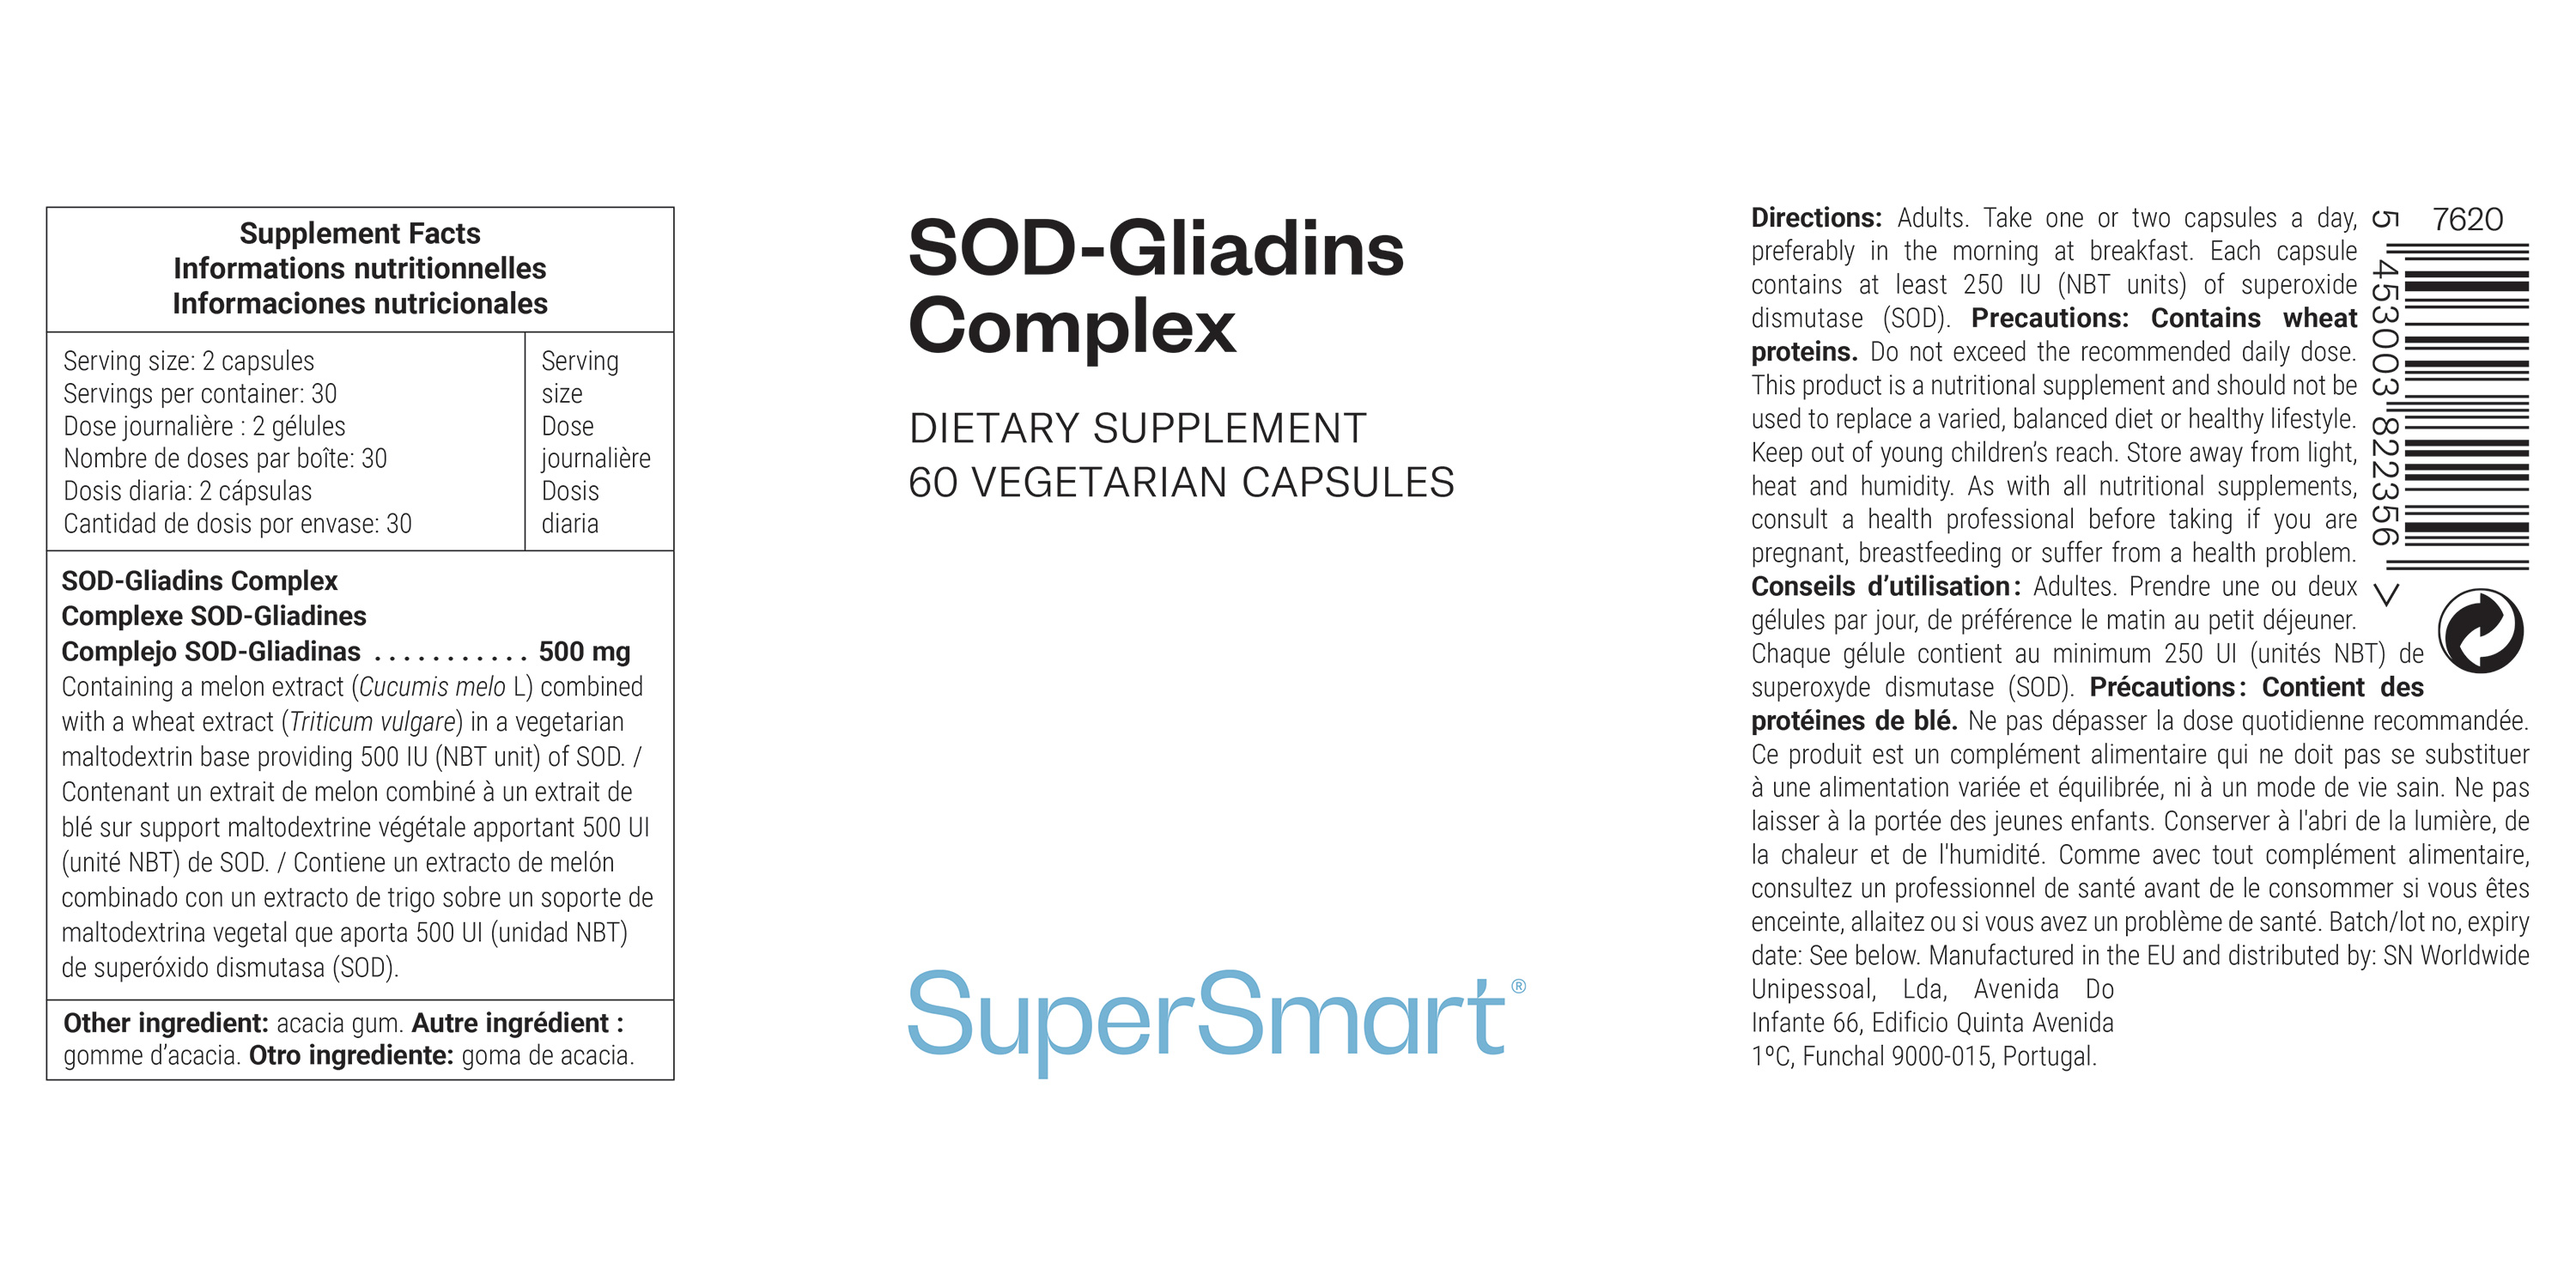 SOD-Gliandis Complex dietary supplement, super antioxidant